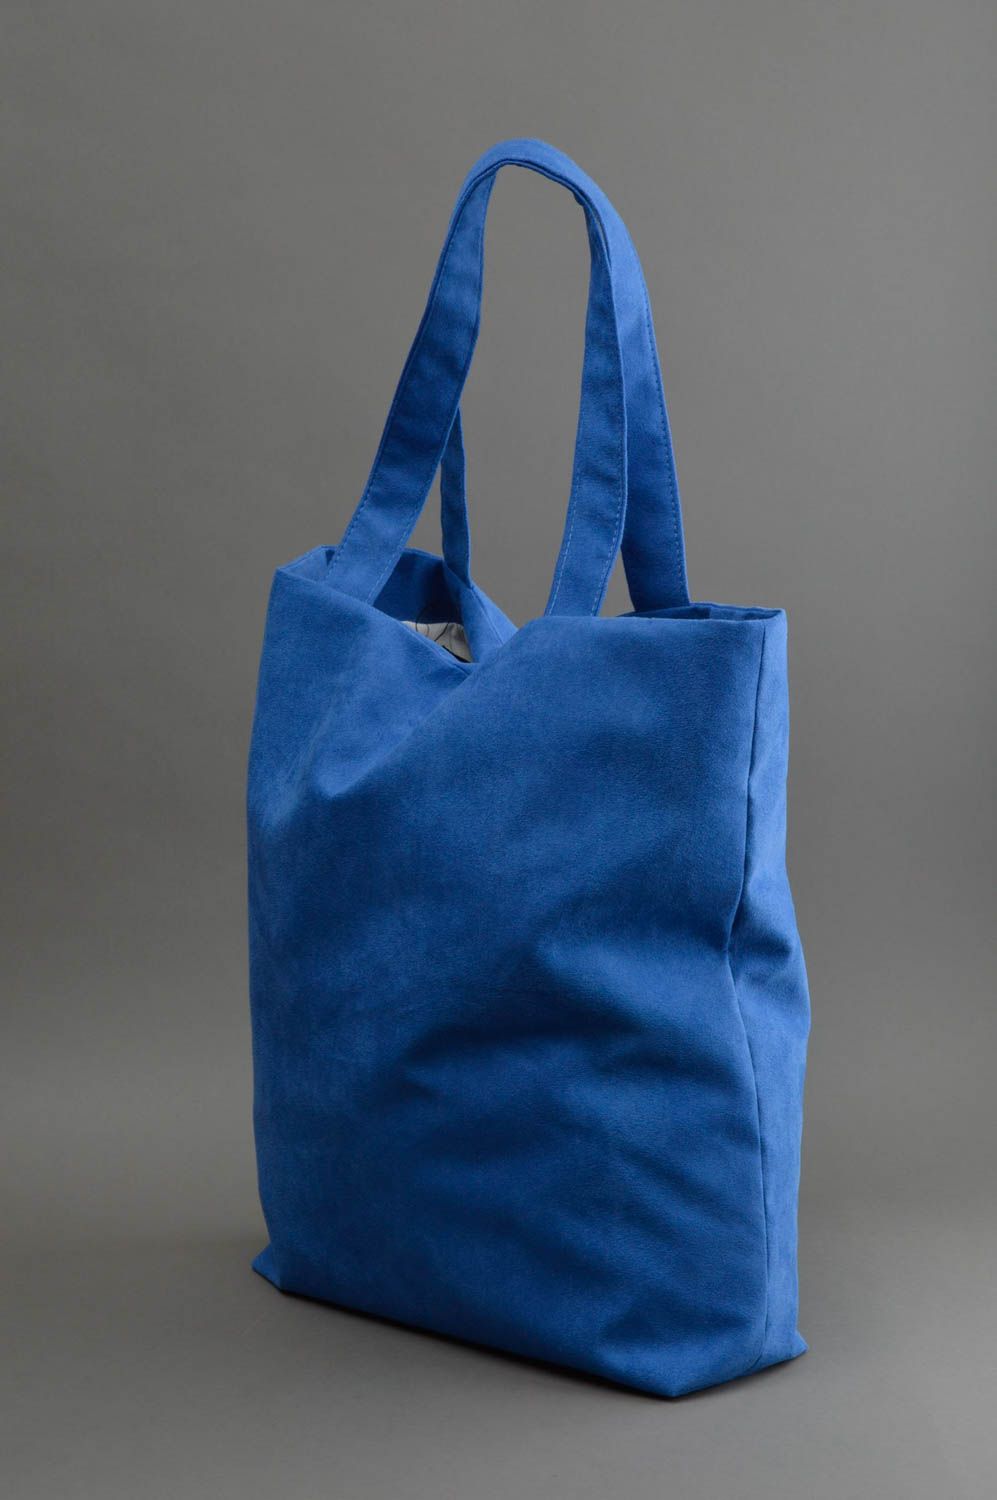 Bolso de gamuza azul hecho a mano regalo original accesorio de mujeres foto 2